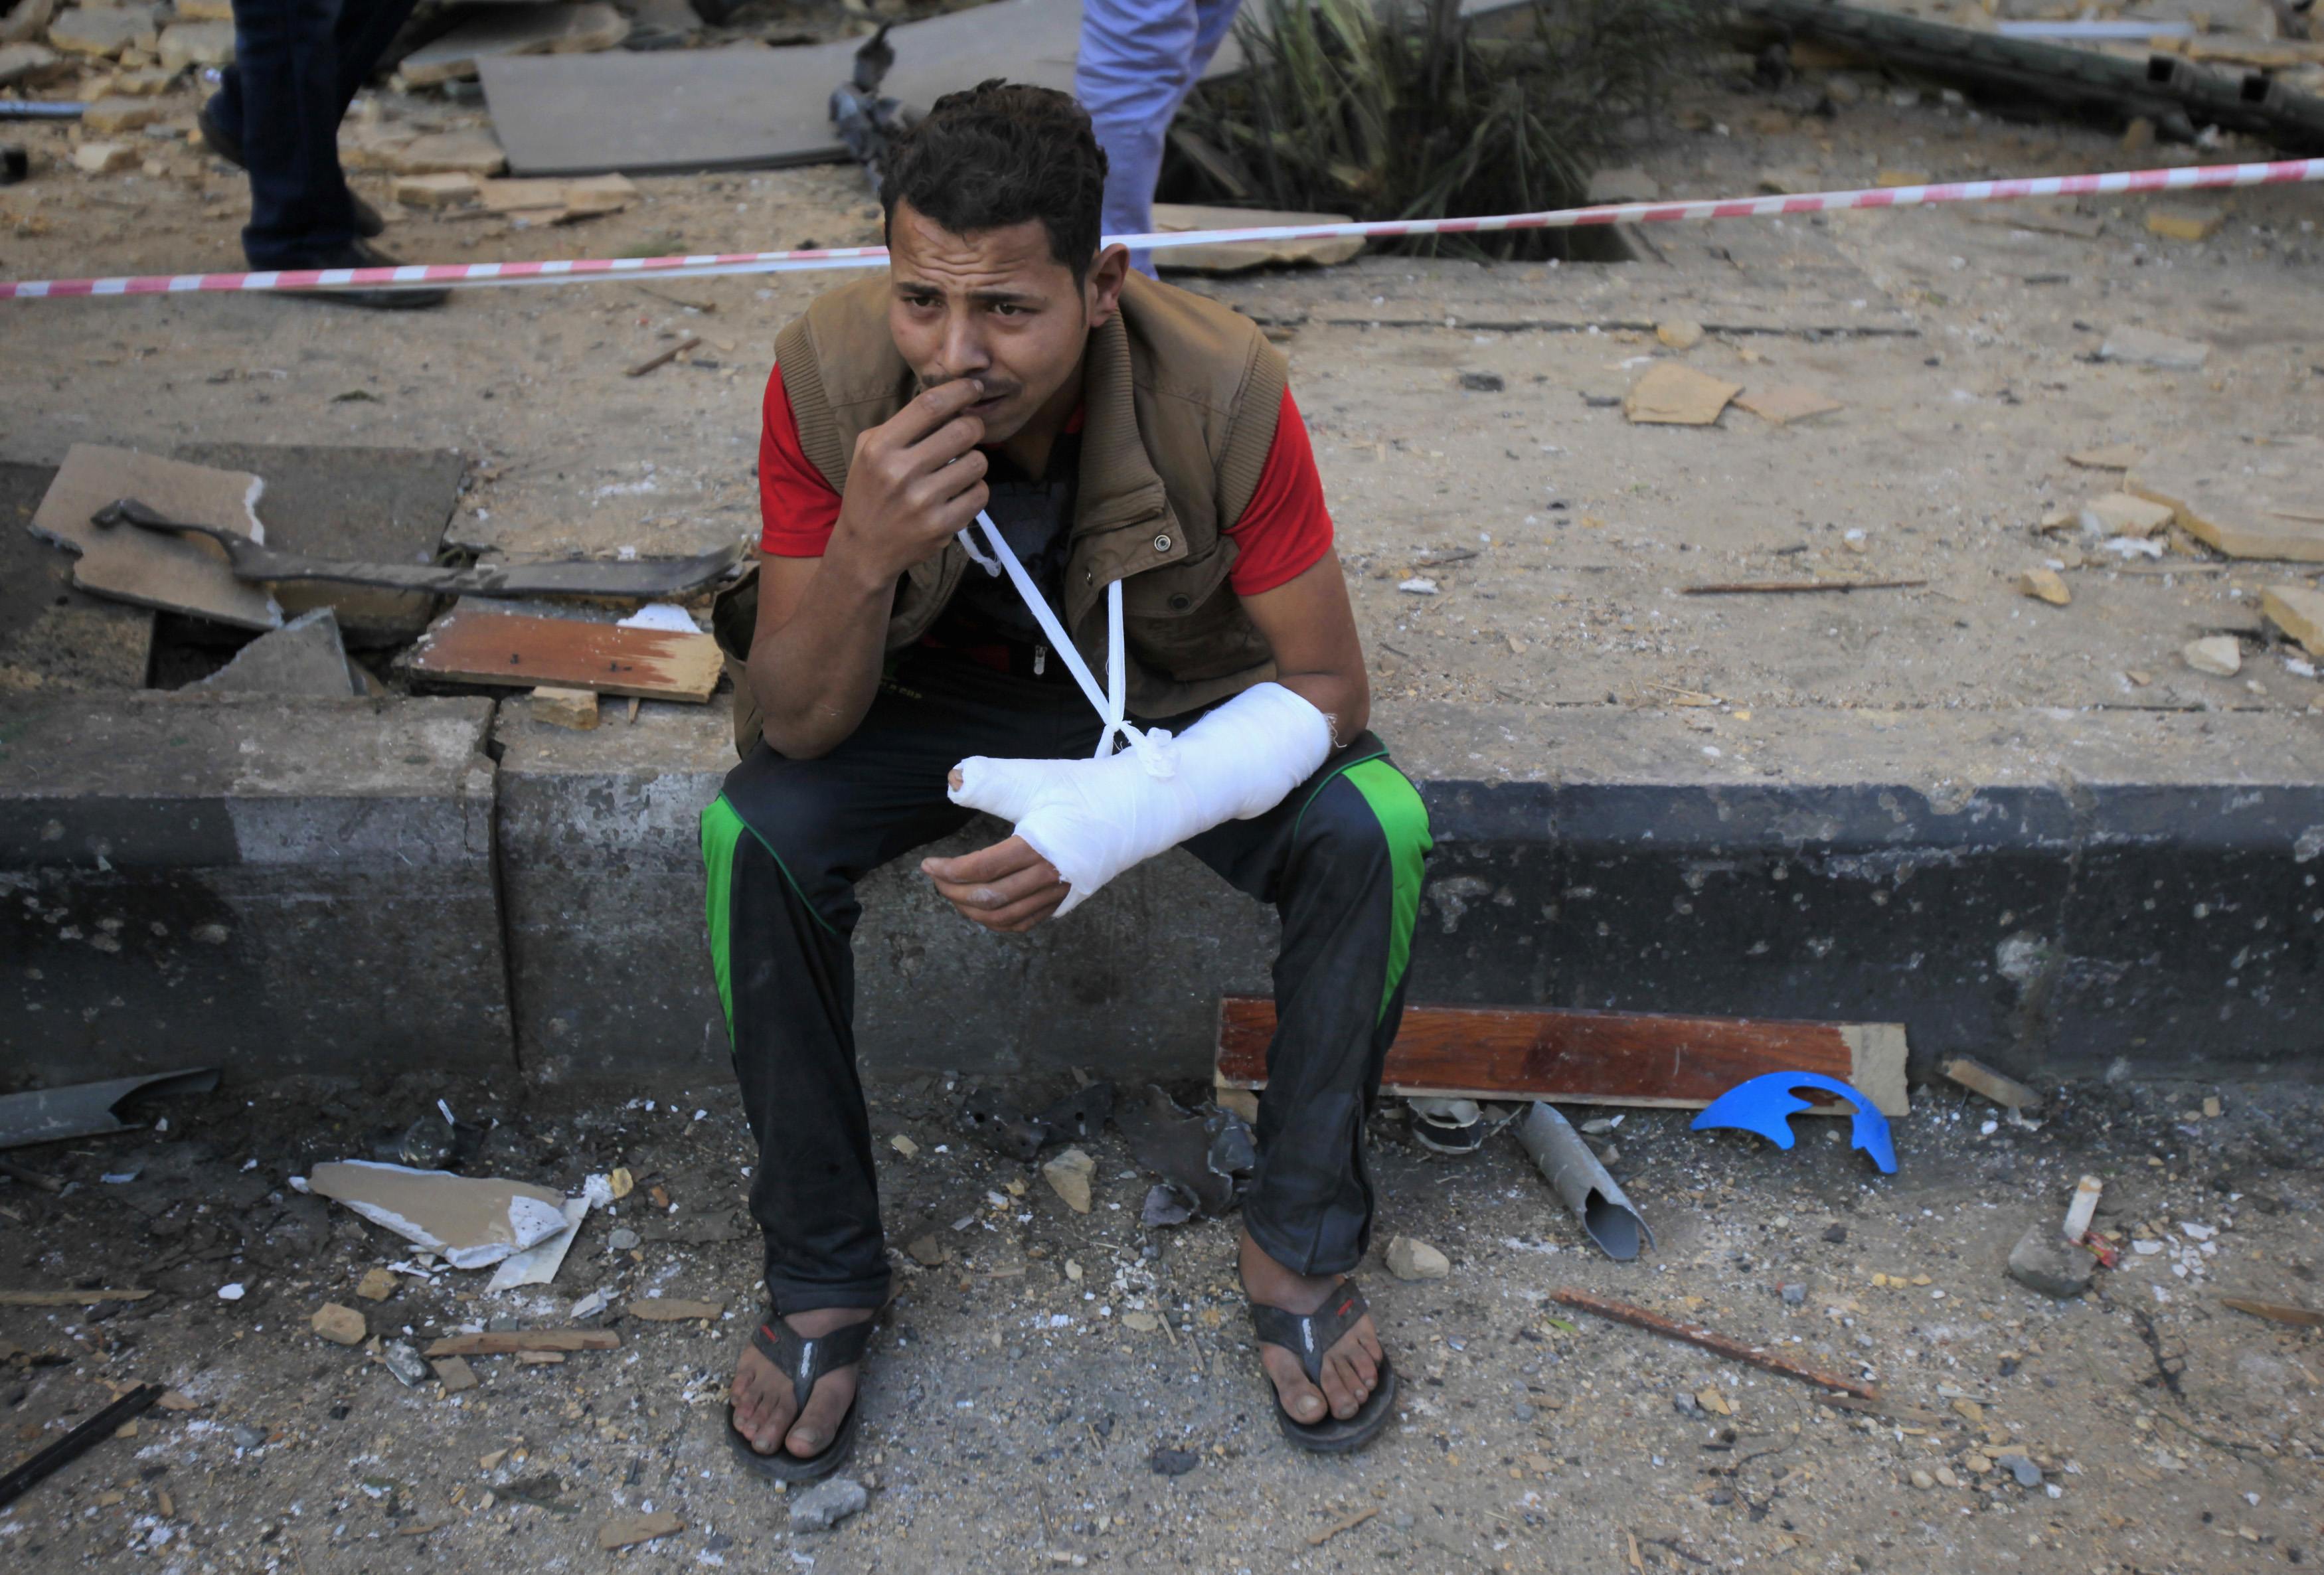 Qaeda-inspired group claims Egypt attacks - monitoring service